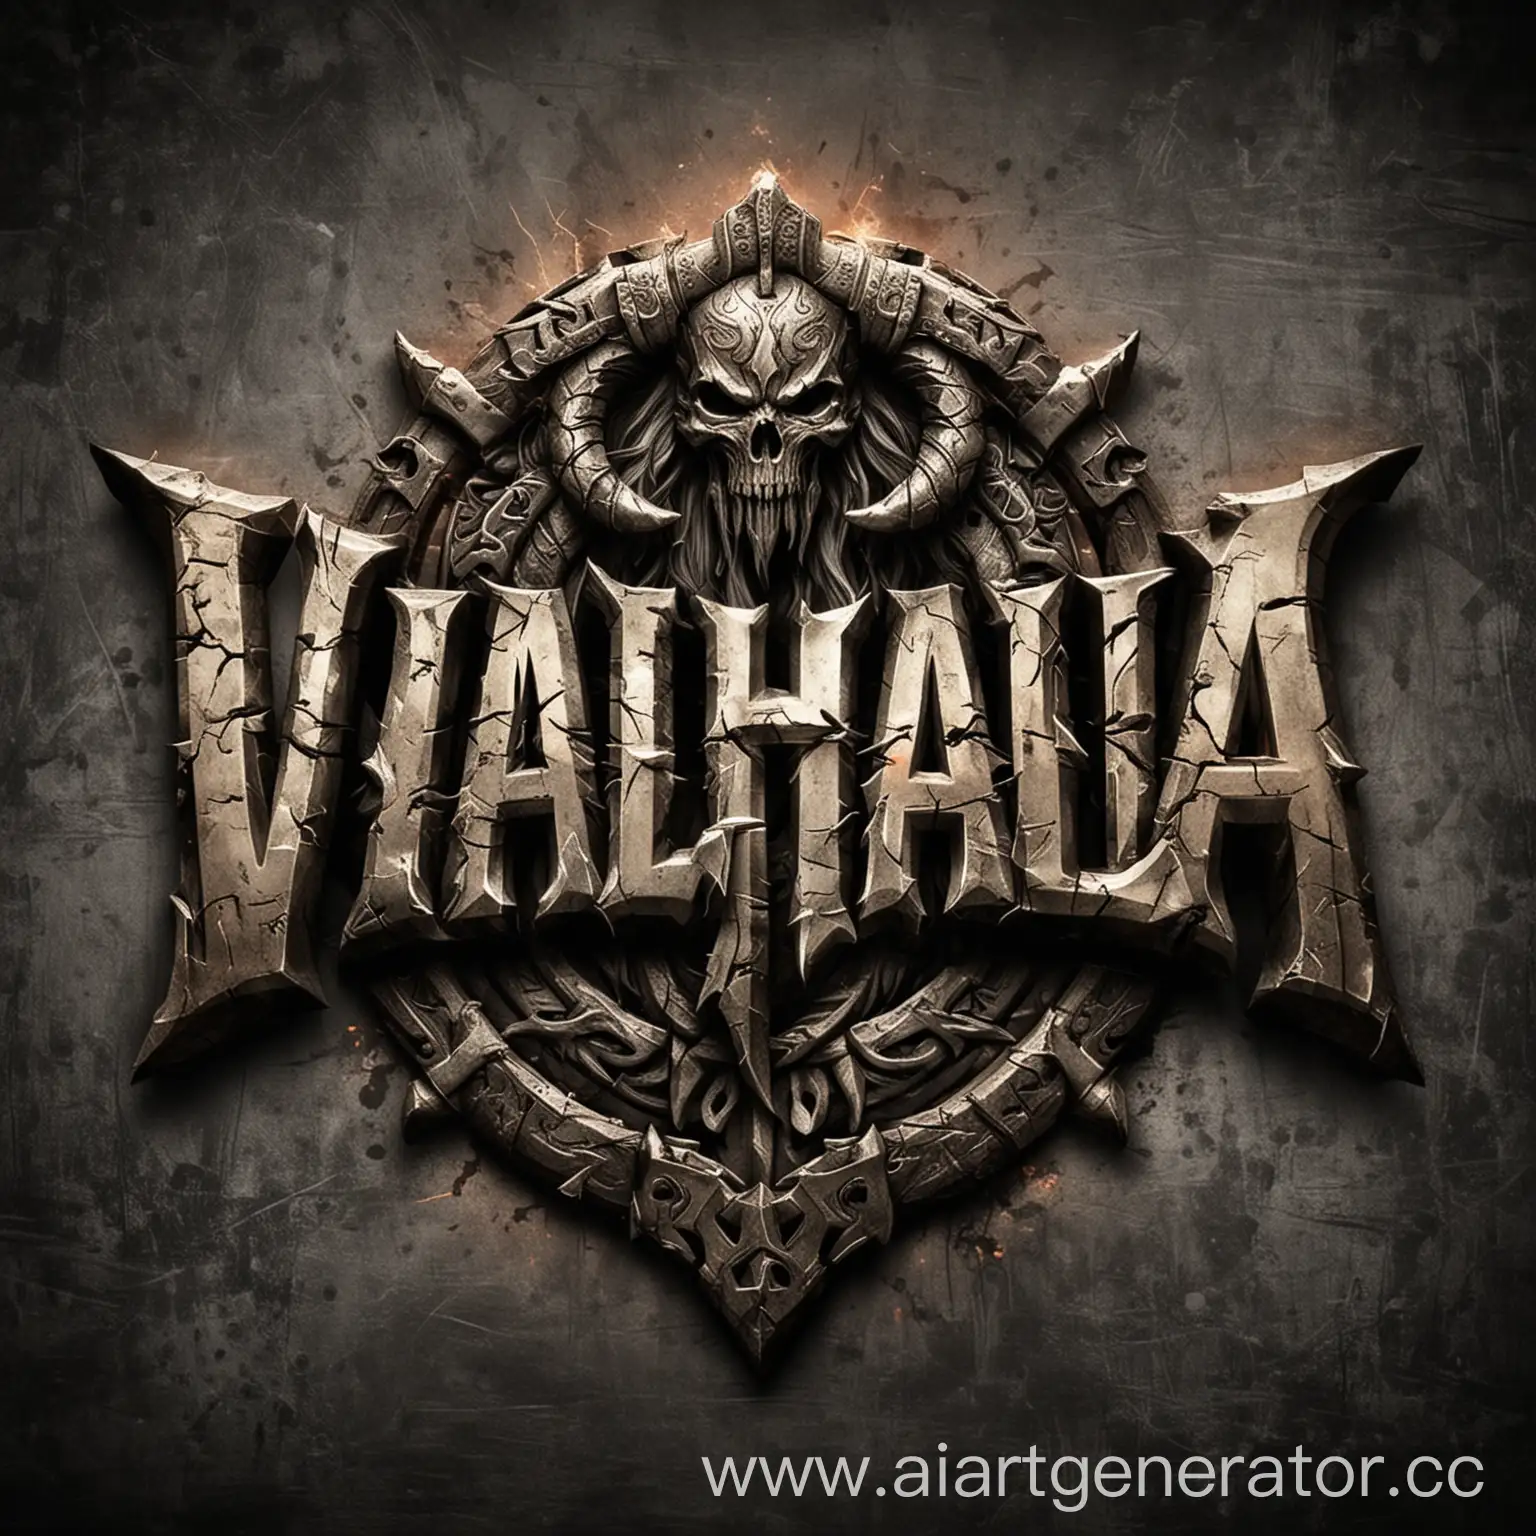 Create me a logo with the exact inscription "VALHALLA TEAM"